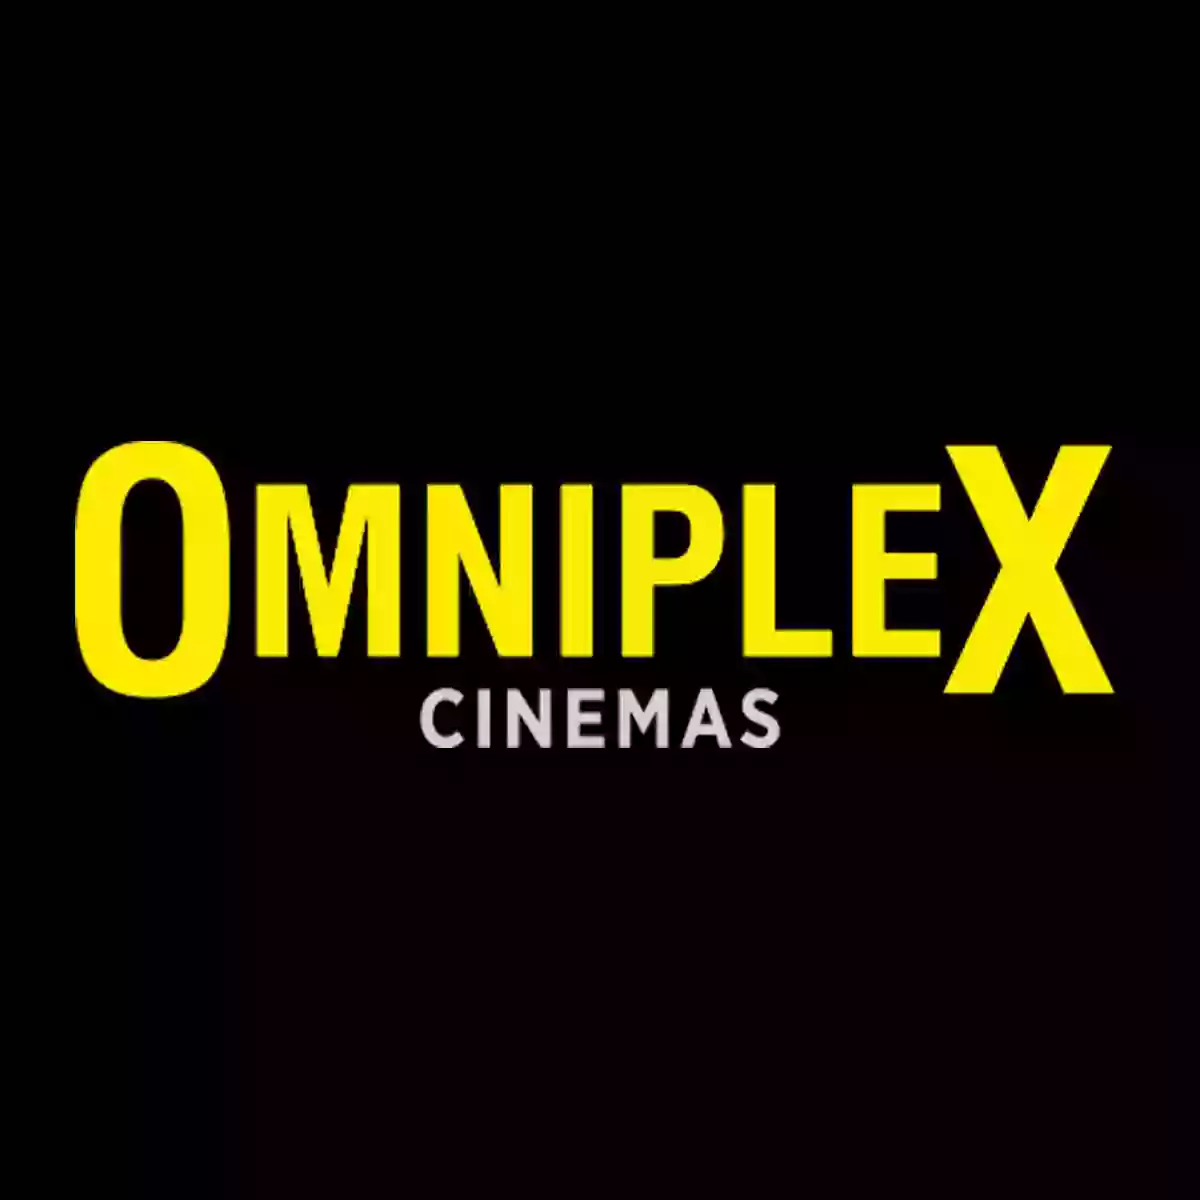 Omniplex Cinema Mullingar